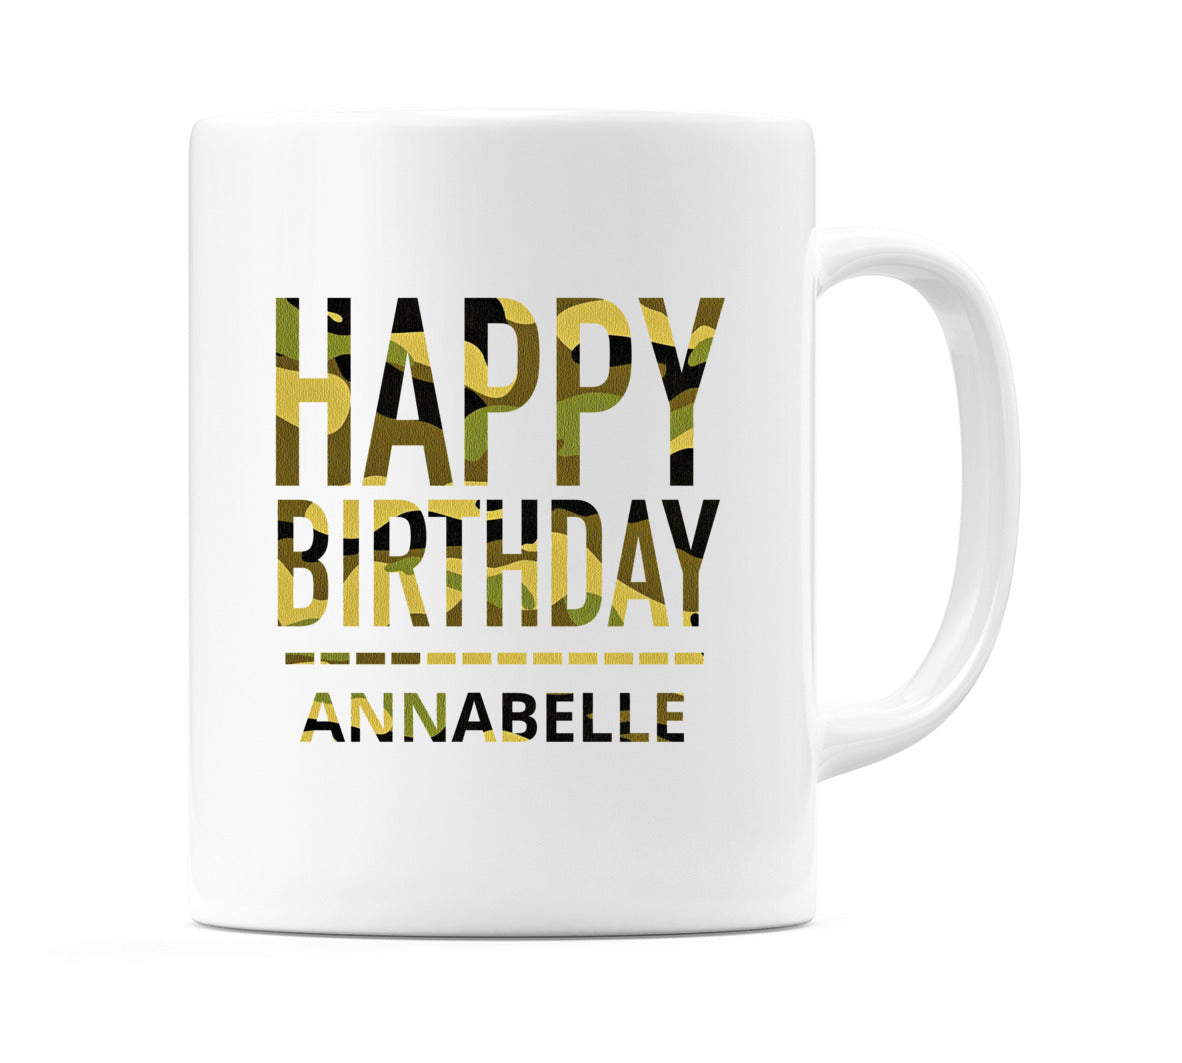 Happy Birthday Annabelle (Camo) Mug Cup by WeDoMugs